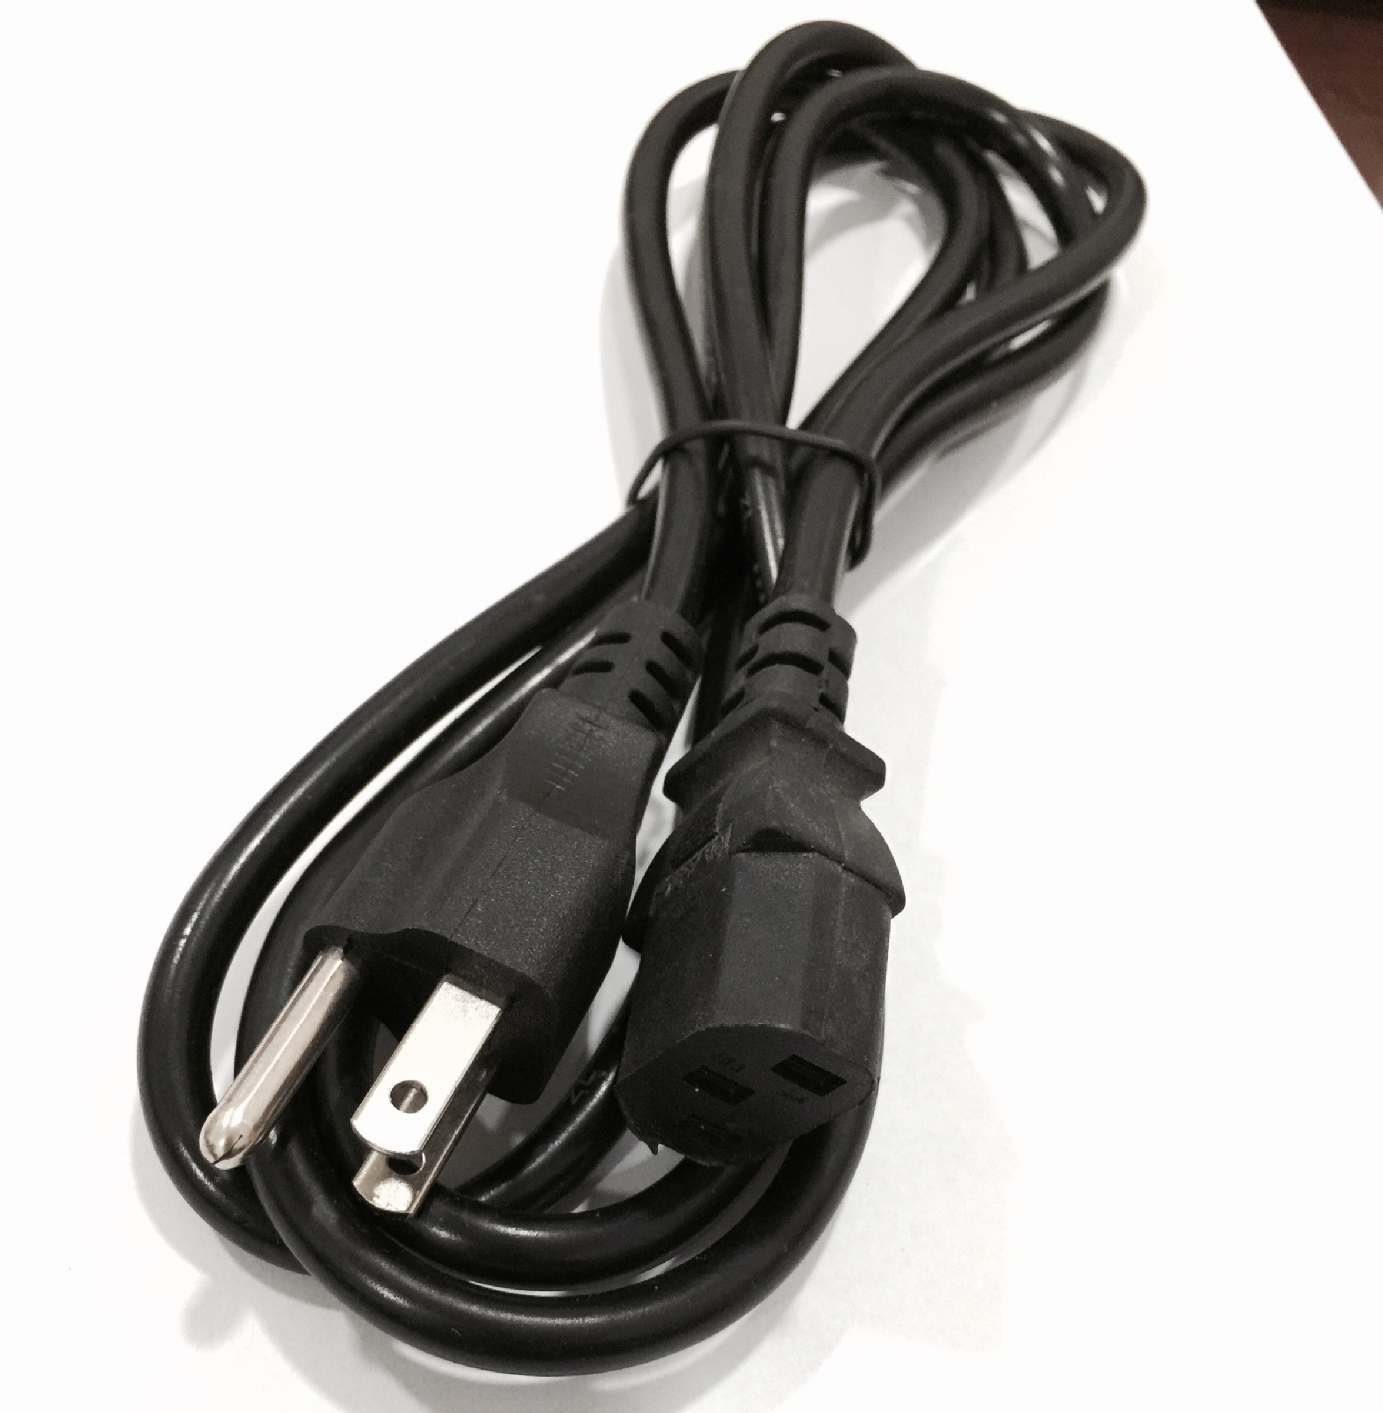 Computer case power cord, 1.5m American standard plug wire